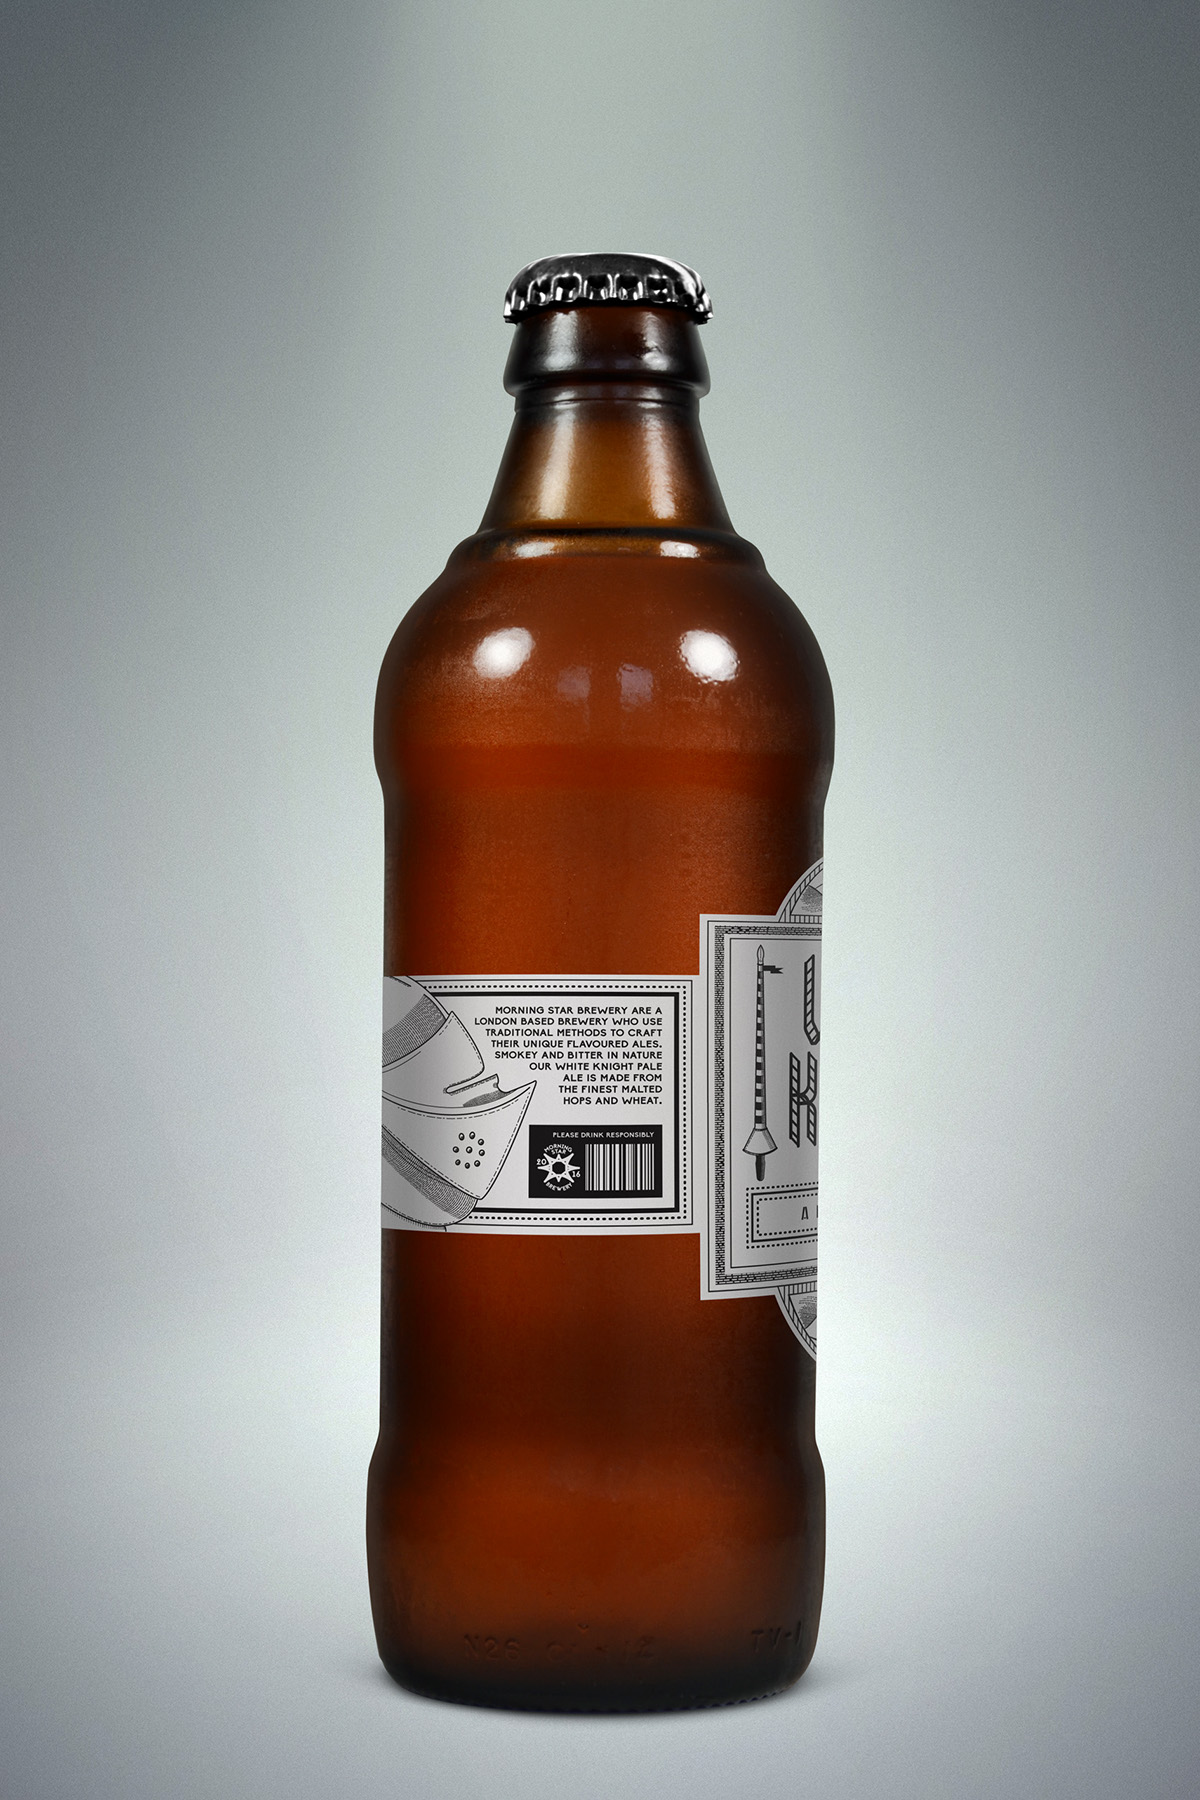 Adobe Portfolio beer bottle ale Label old fashioned traditional medieval monochrome